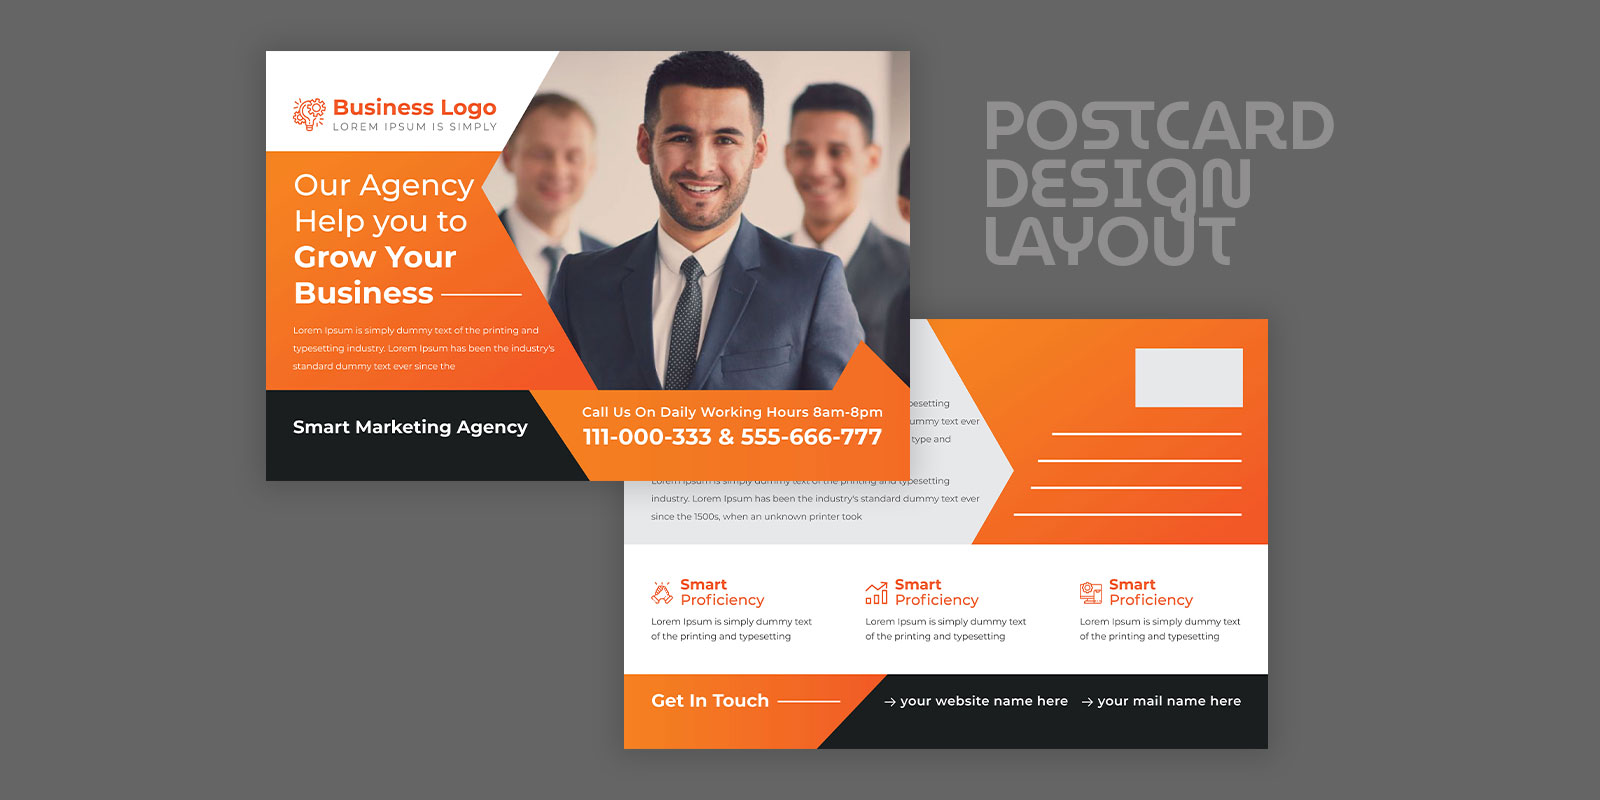 Corporate Services Marketing Material Design - Postcard